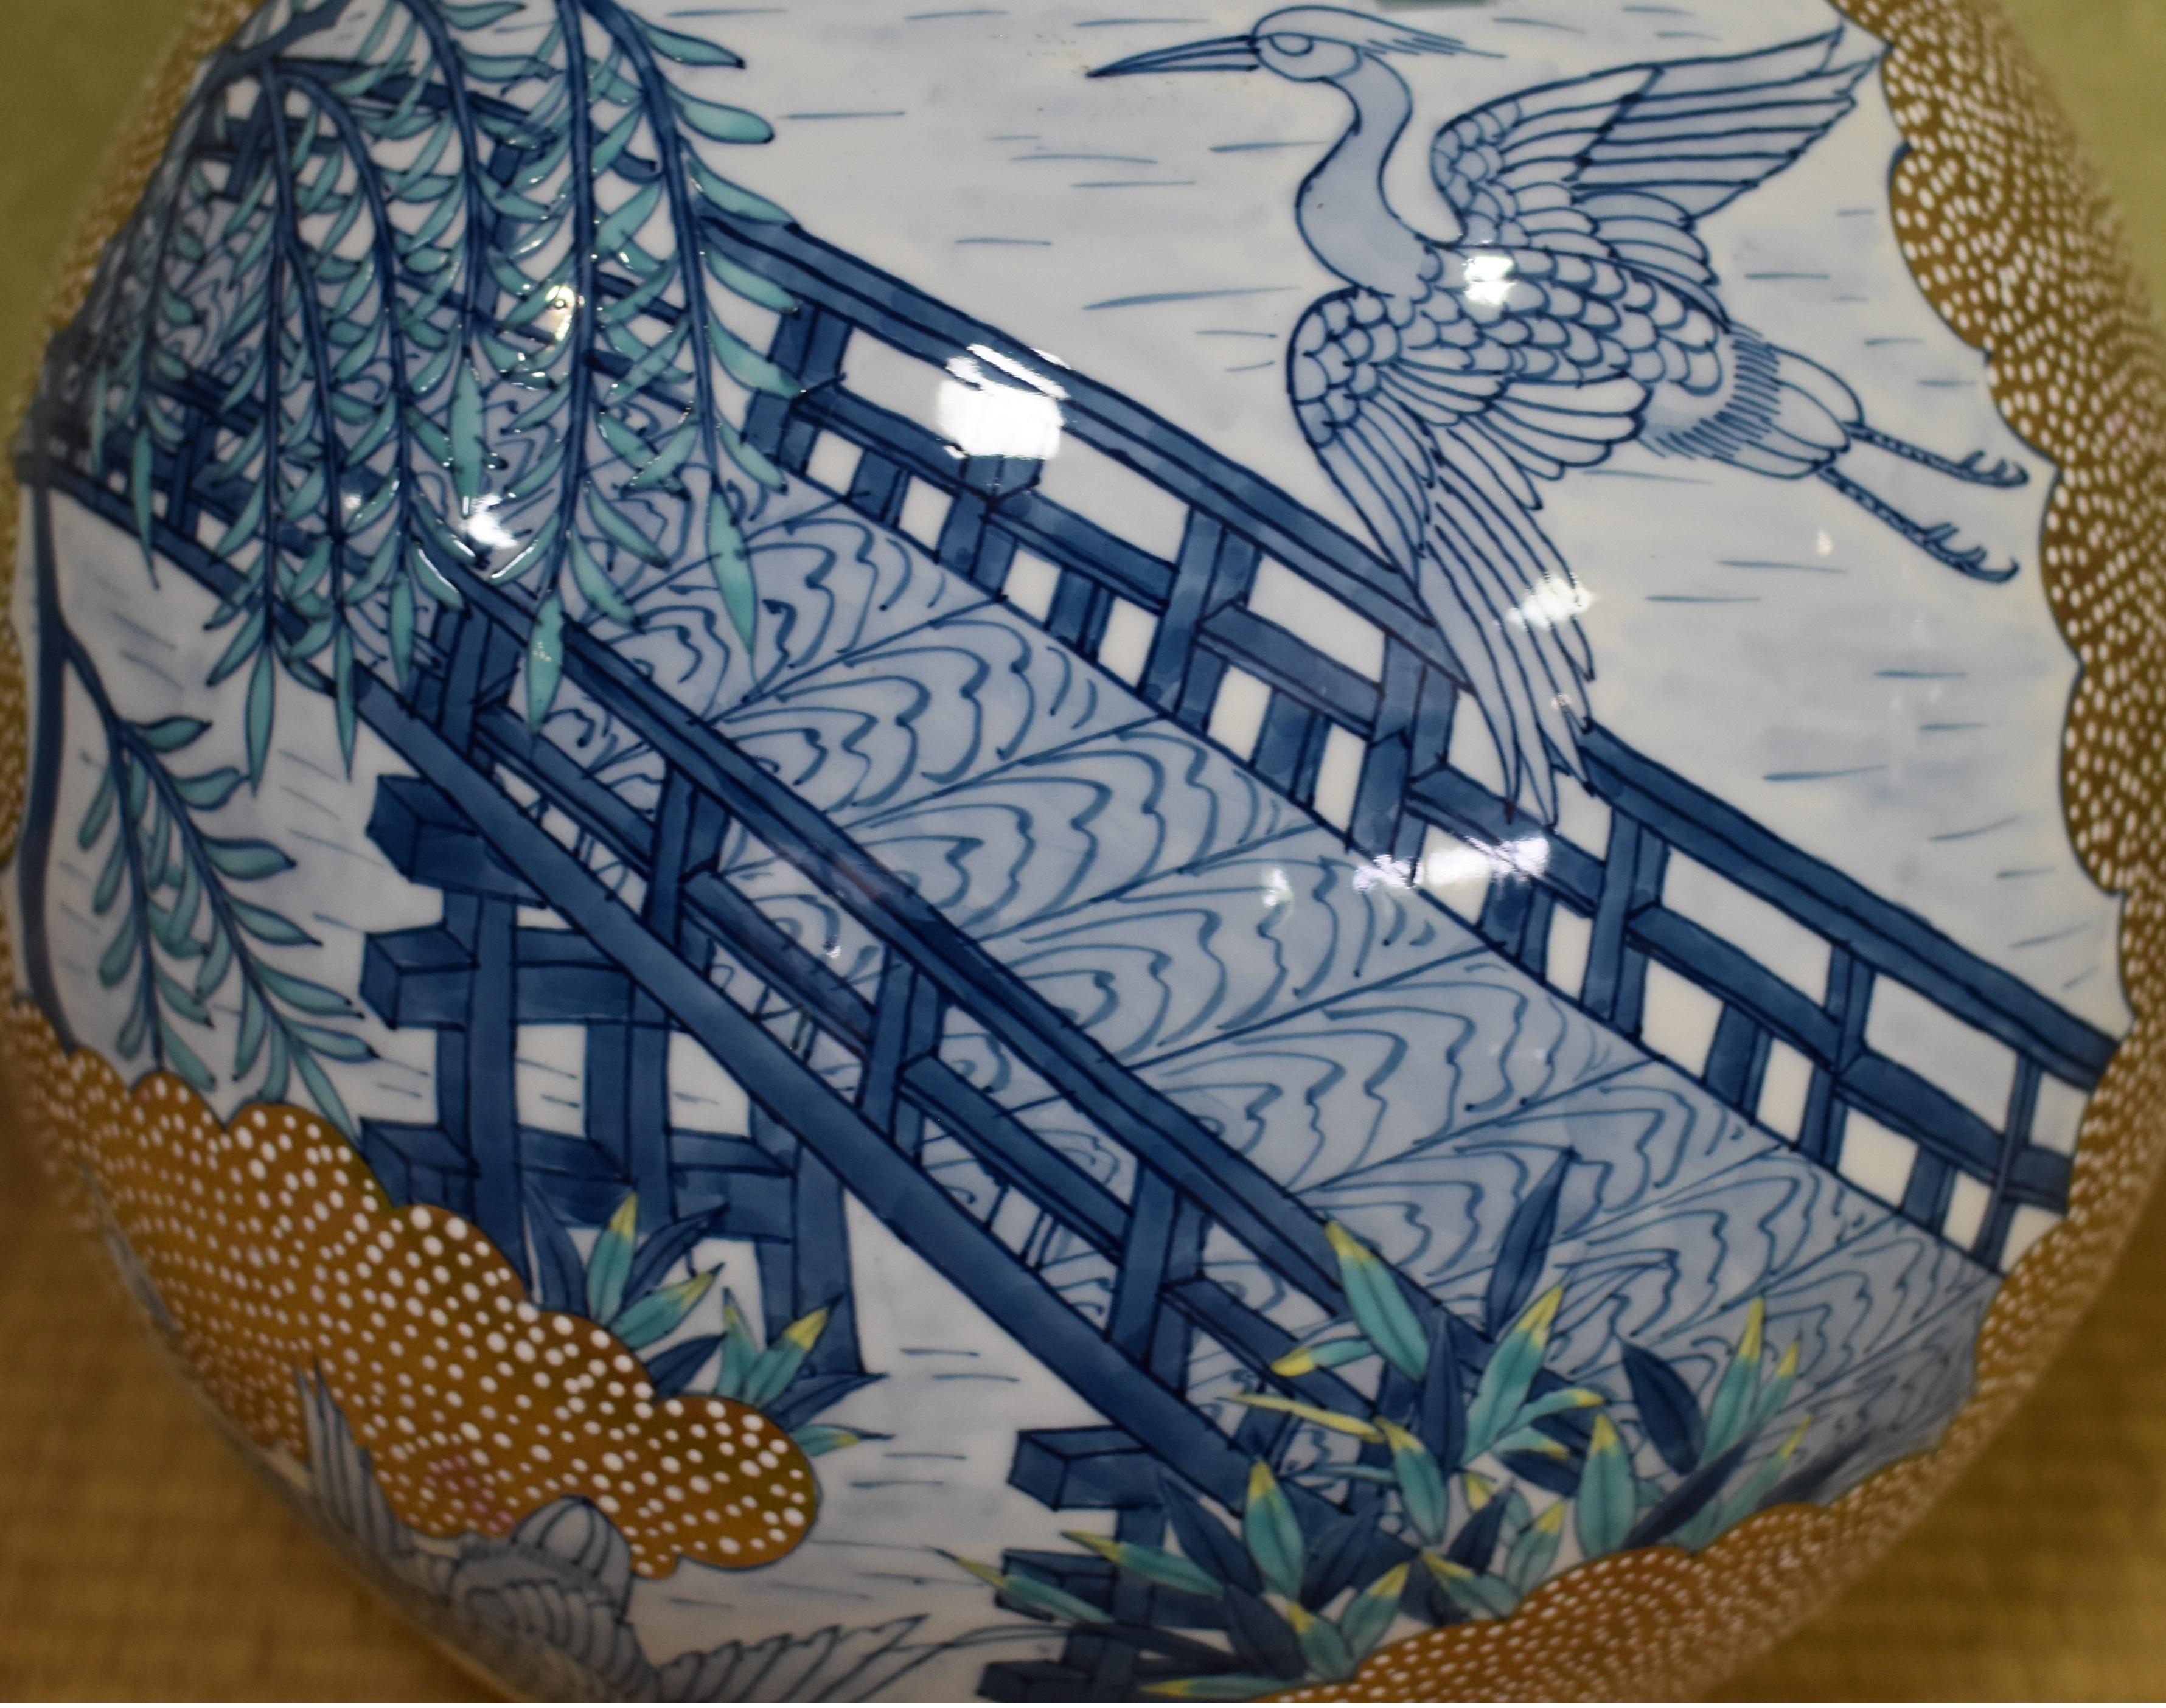 Japanese Contemporary Blue Gold Porcelain Vase by Master Artist 1